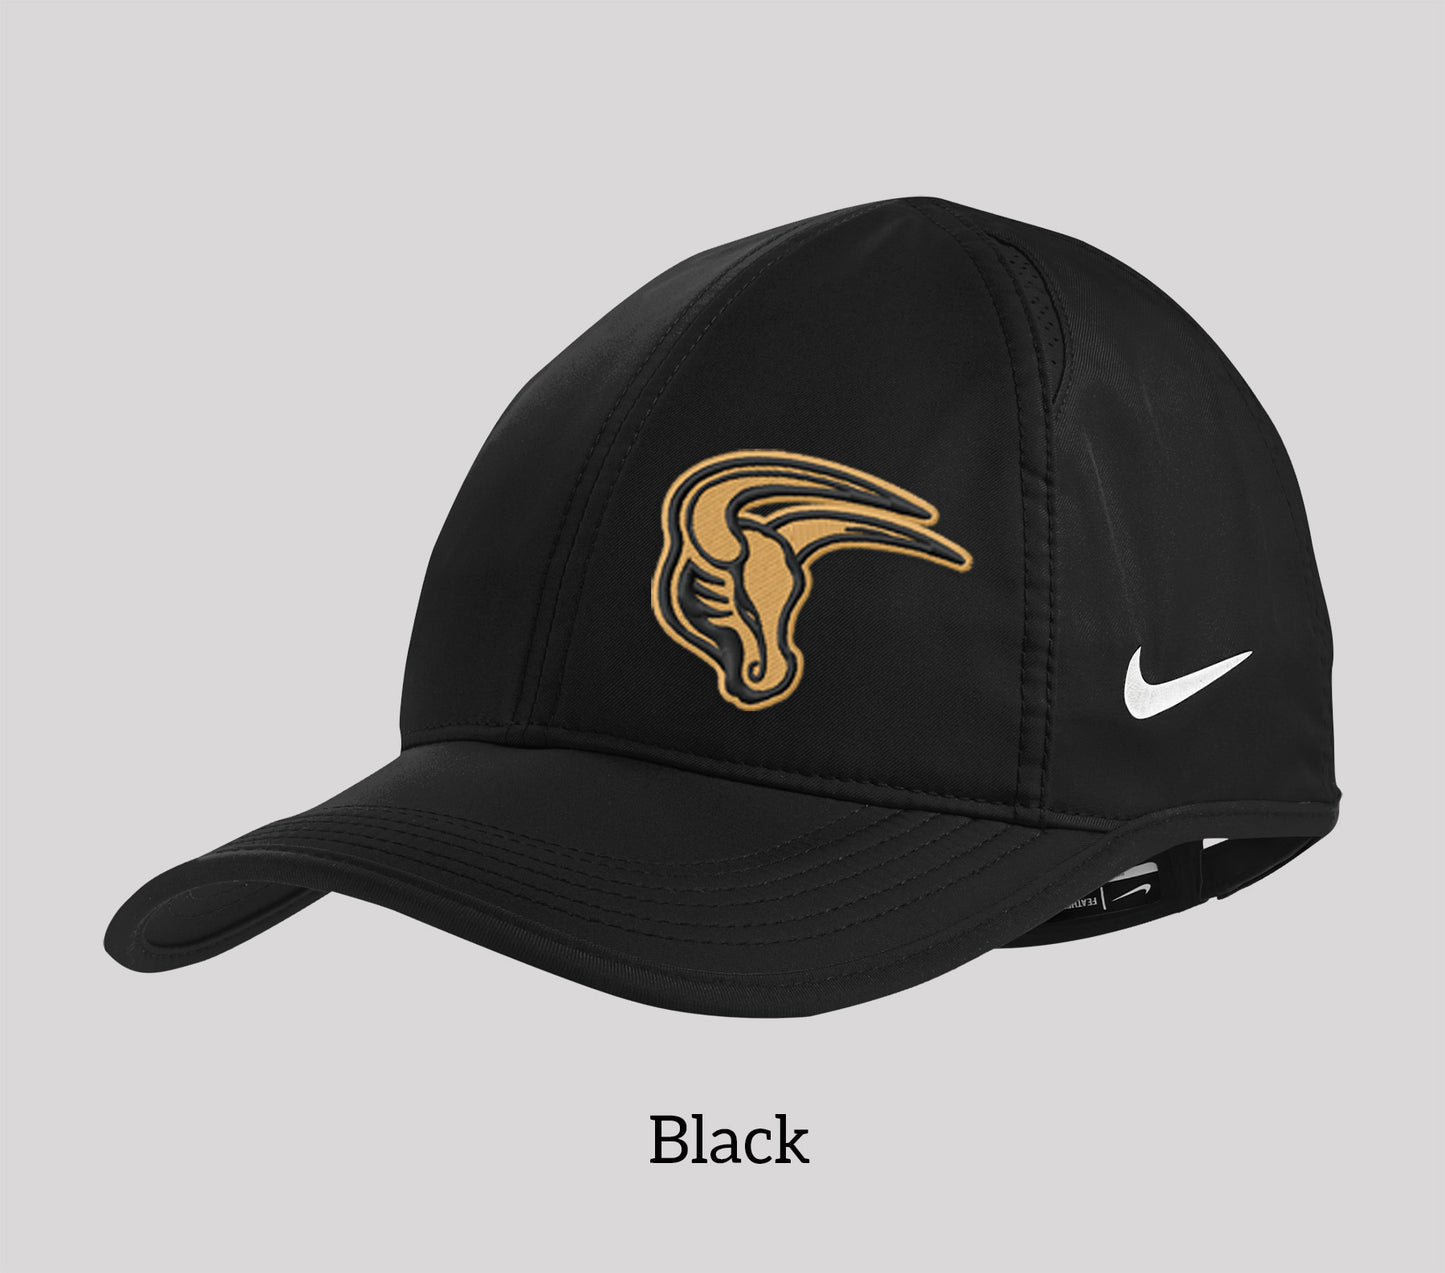 MSIS PTO-Maverick Nike Featherlight Hat (3 Color Options, 2 Mav Options)